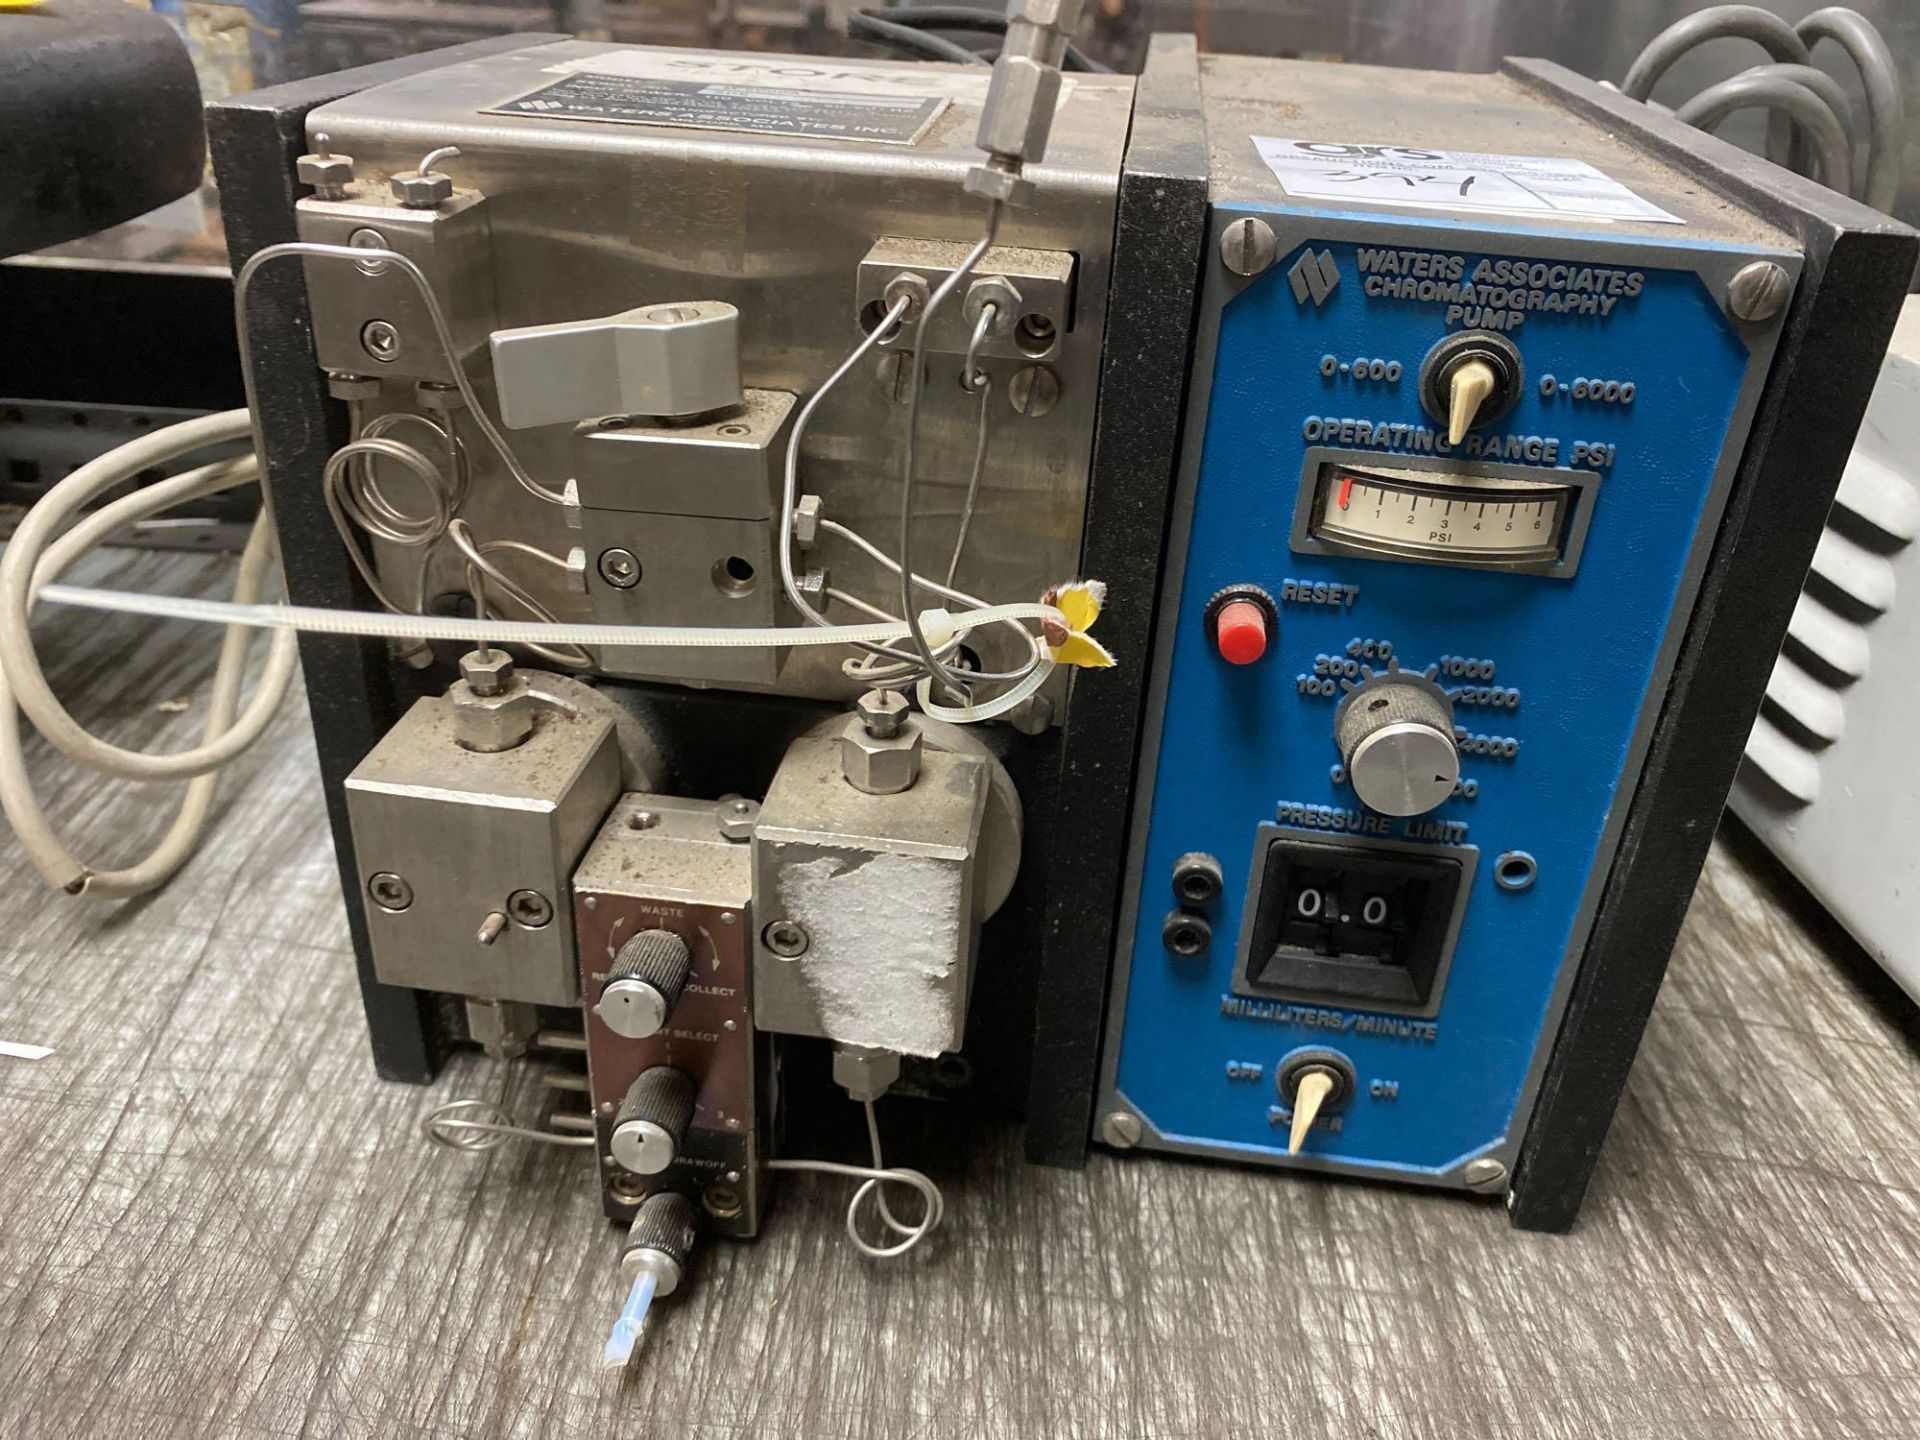 Waters Associates Chromatography Pump